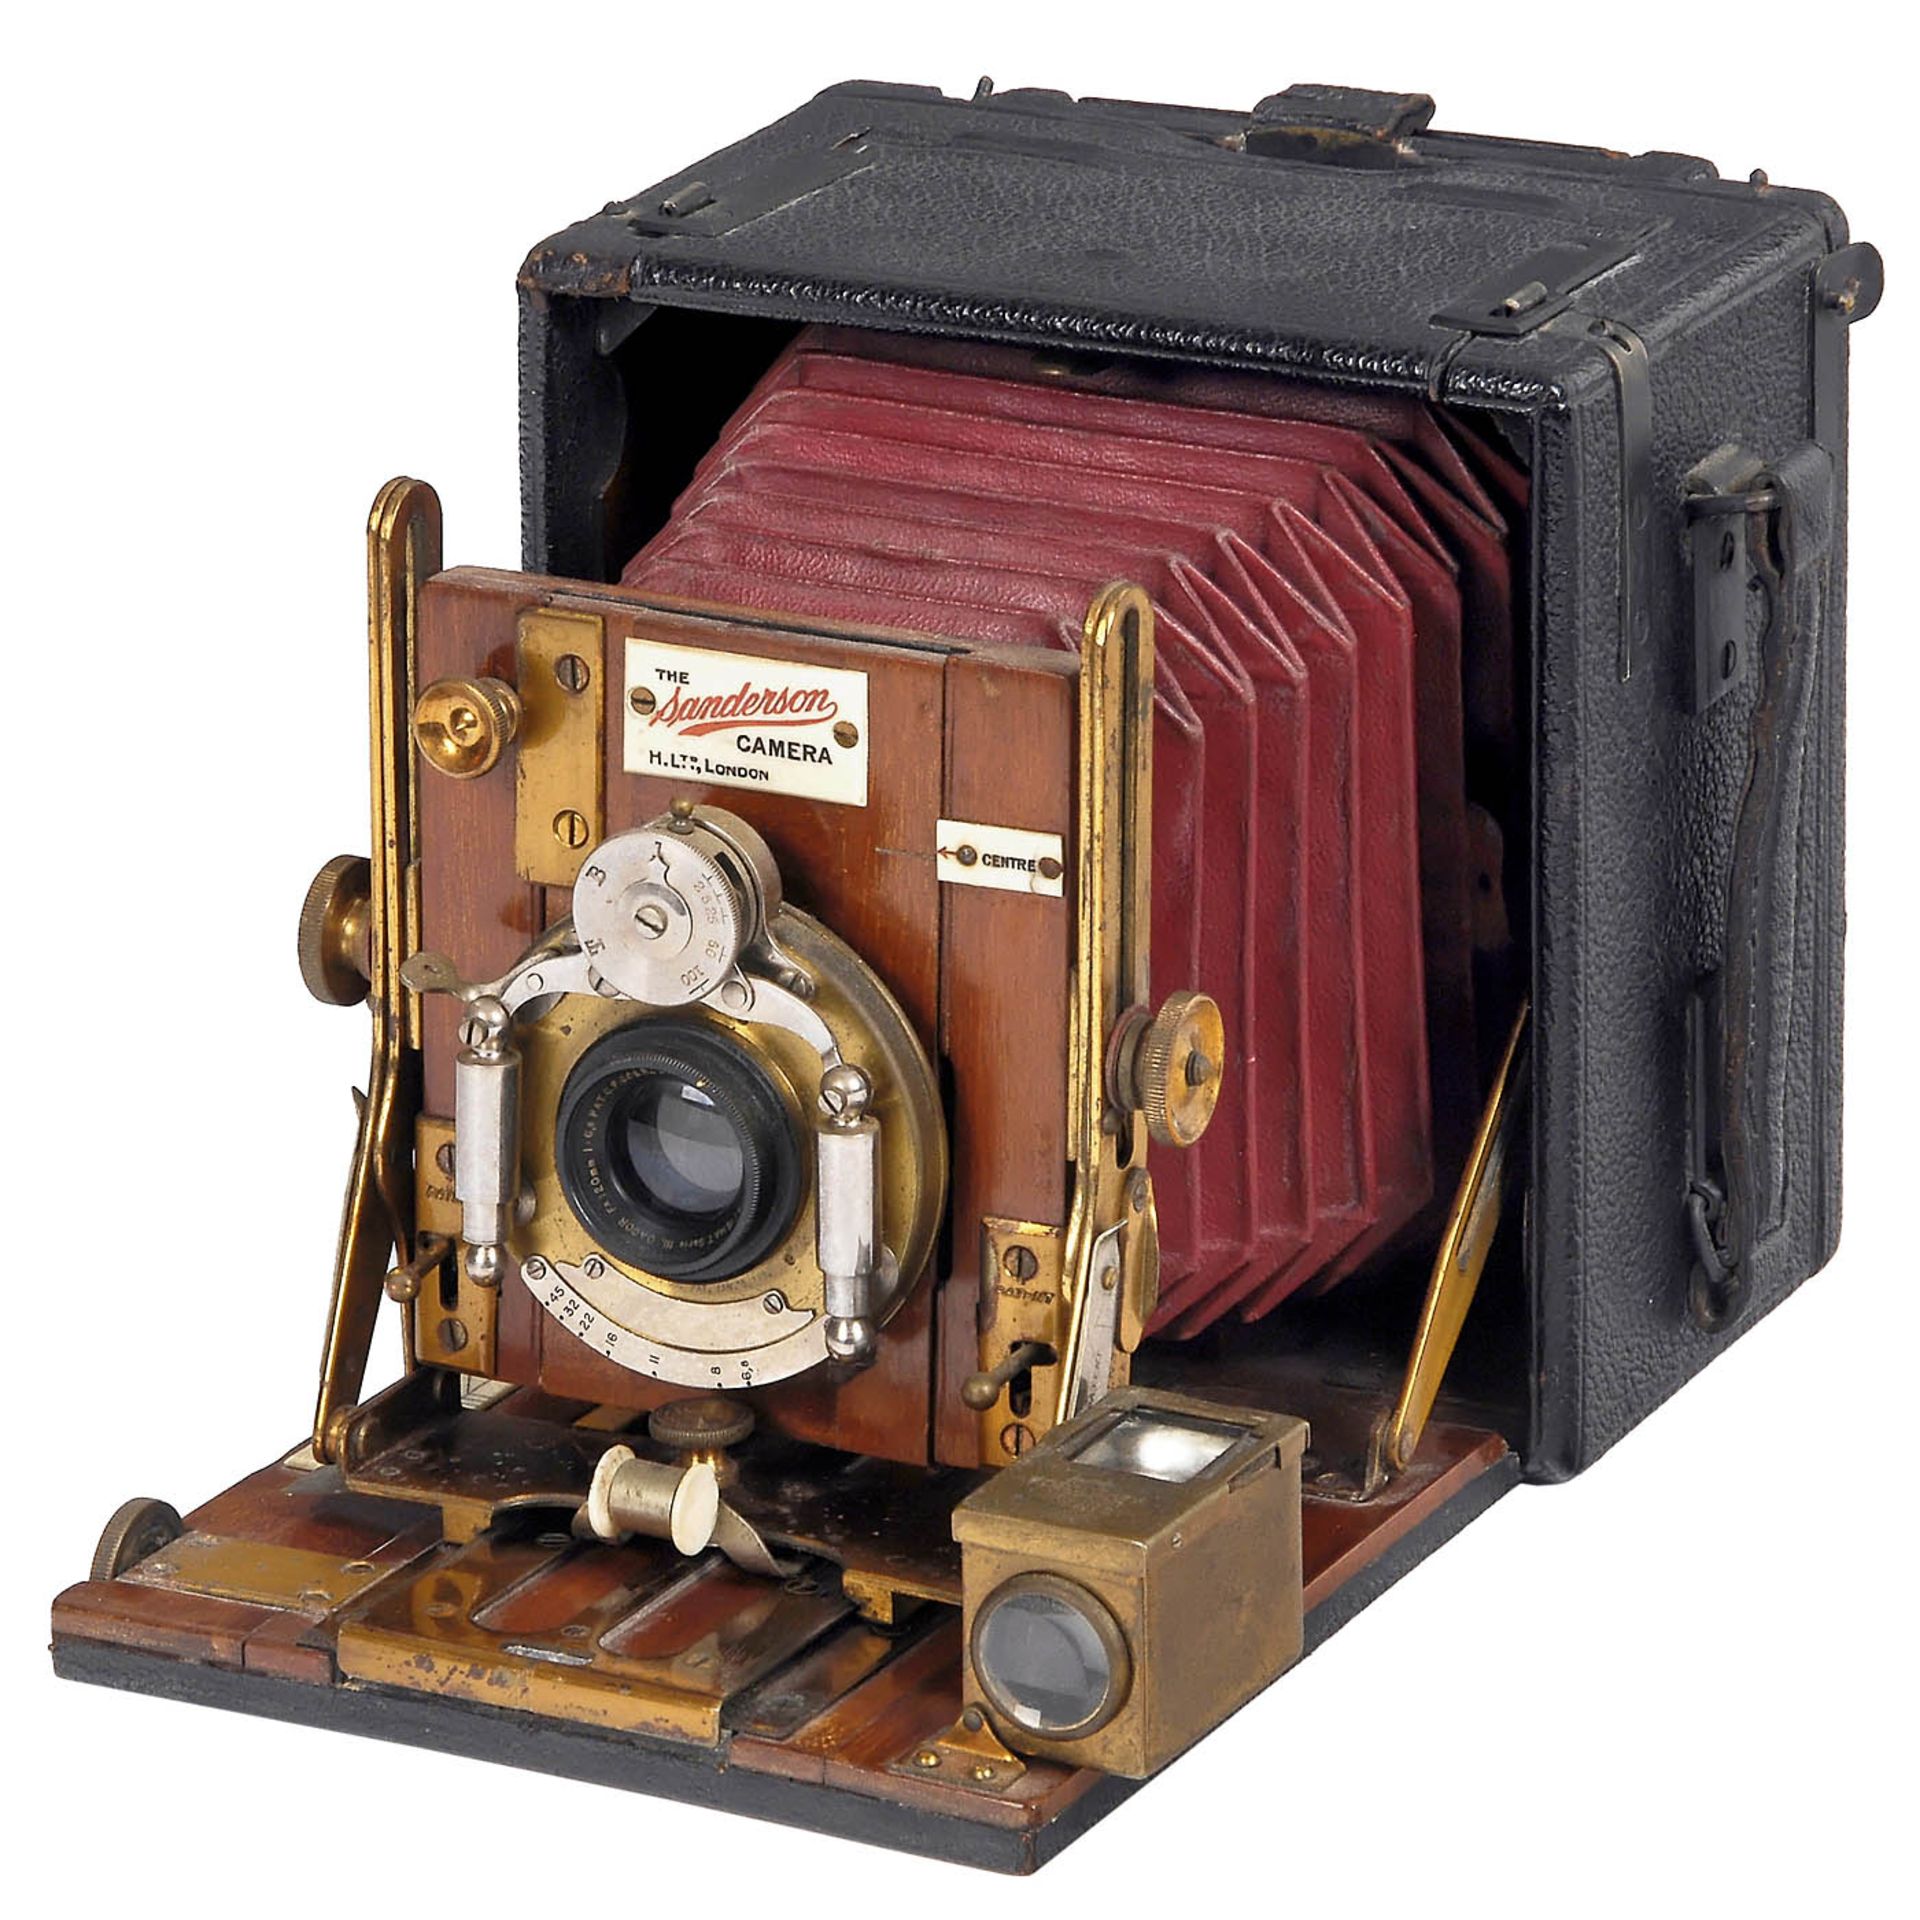 The Sanderson Hand Camera, c. 1900